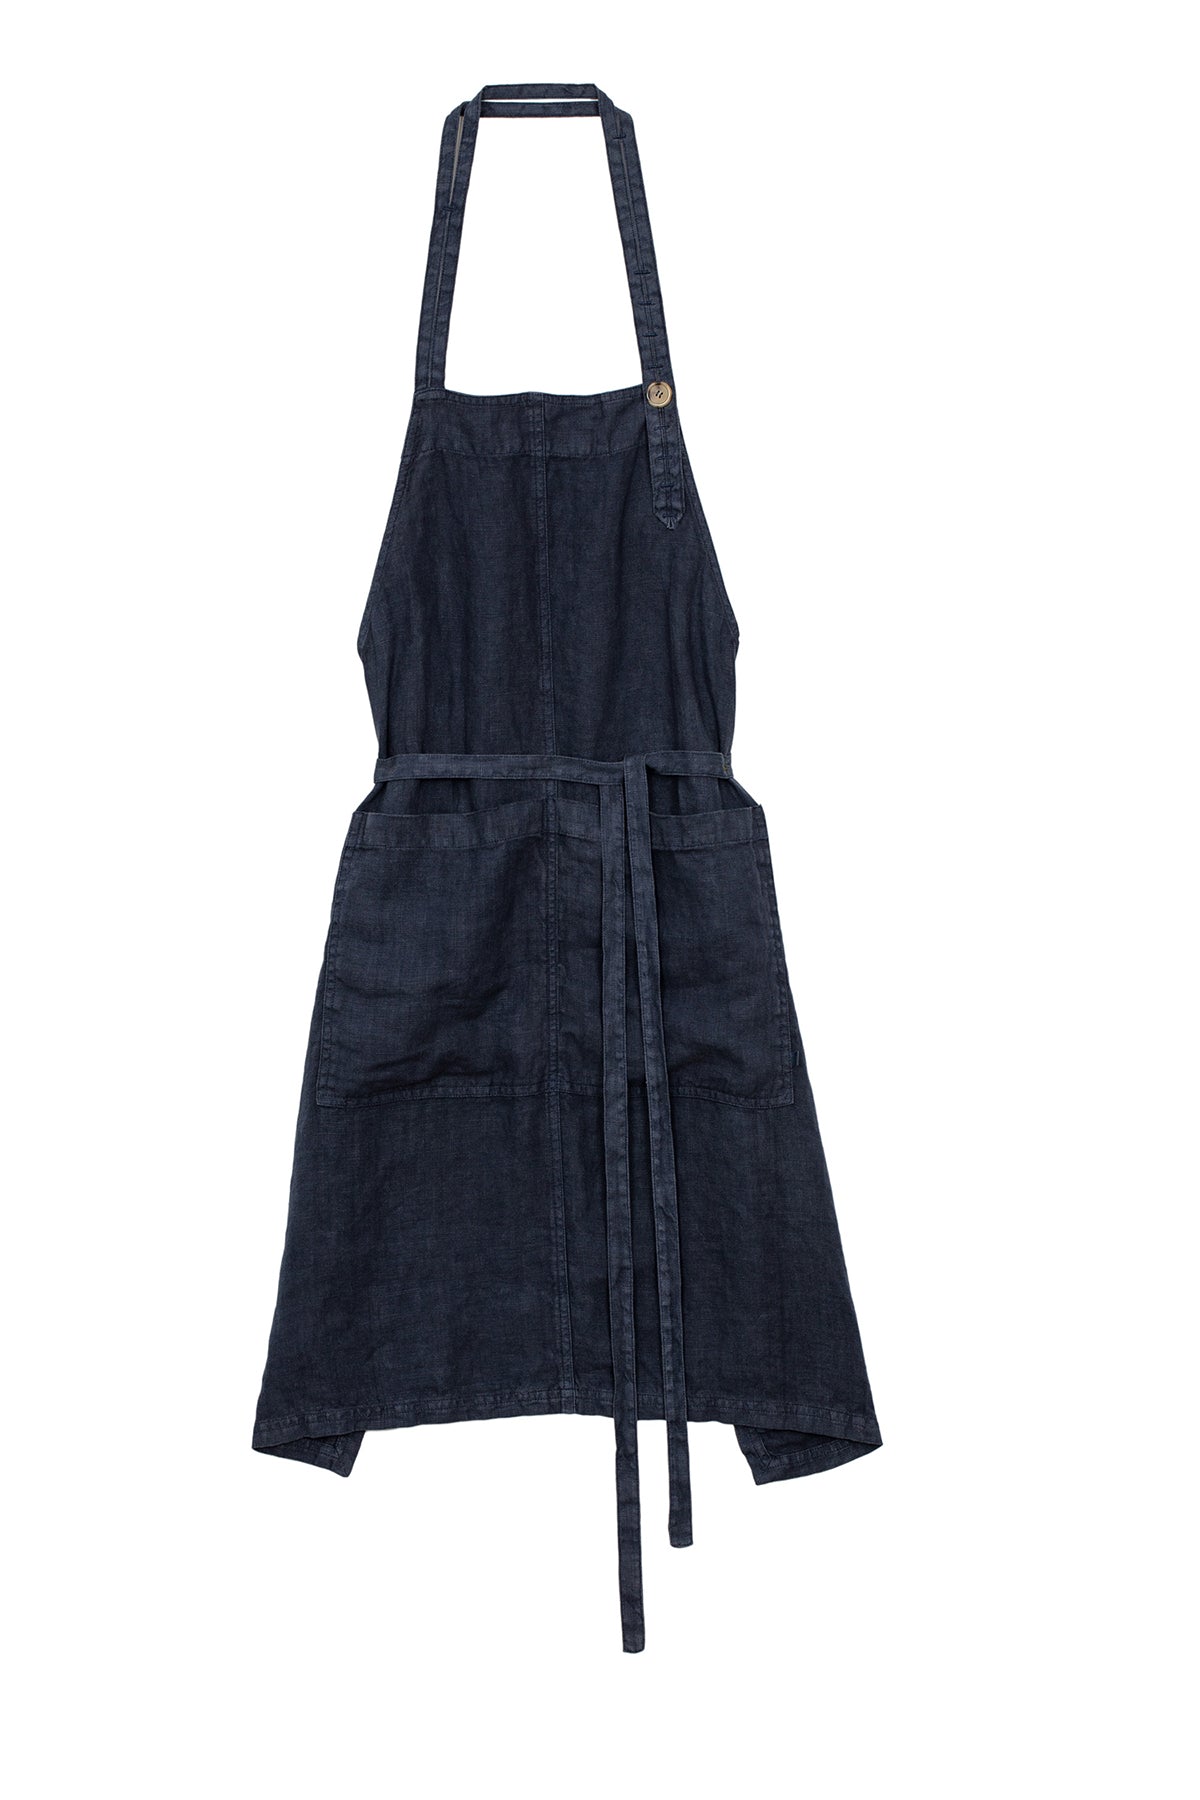   Linen apron - indigo with adjustable neck strap by Jenny Graham Home. 